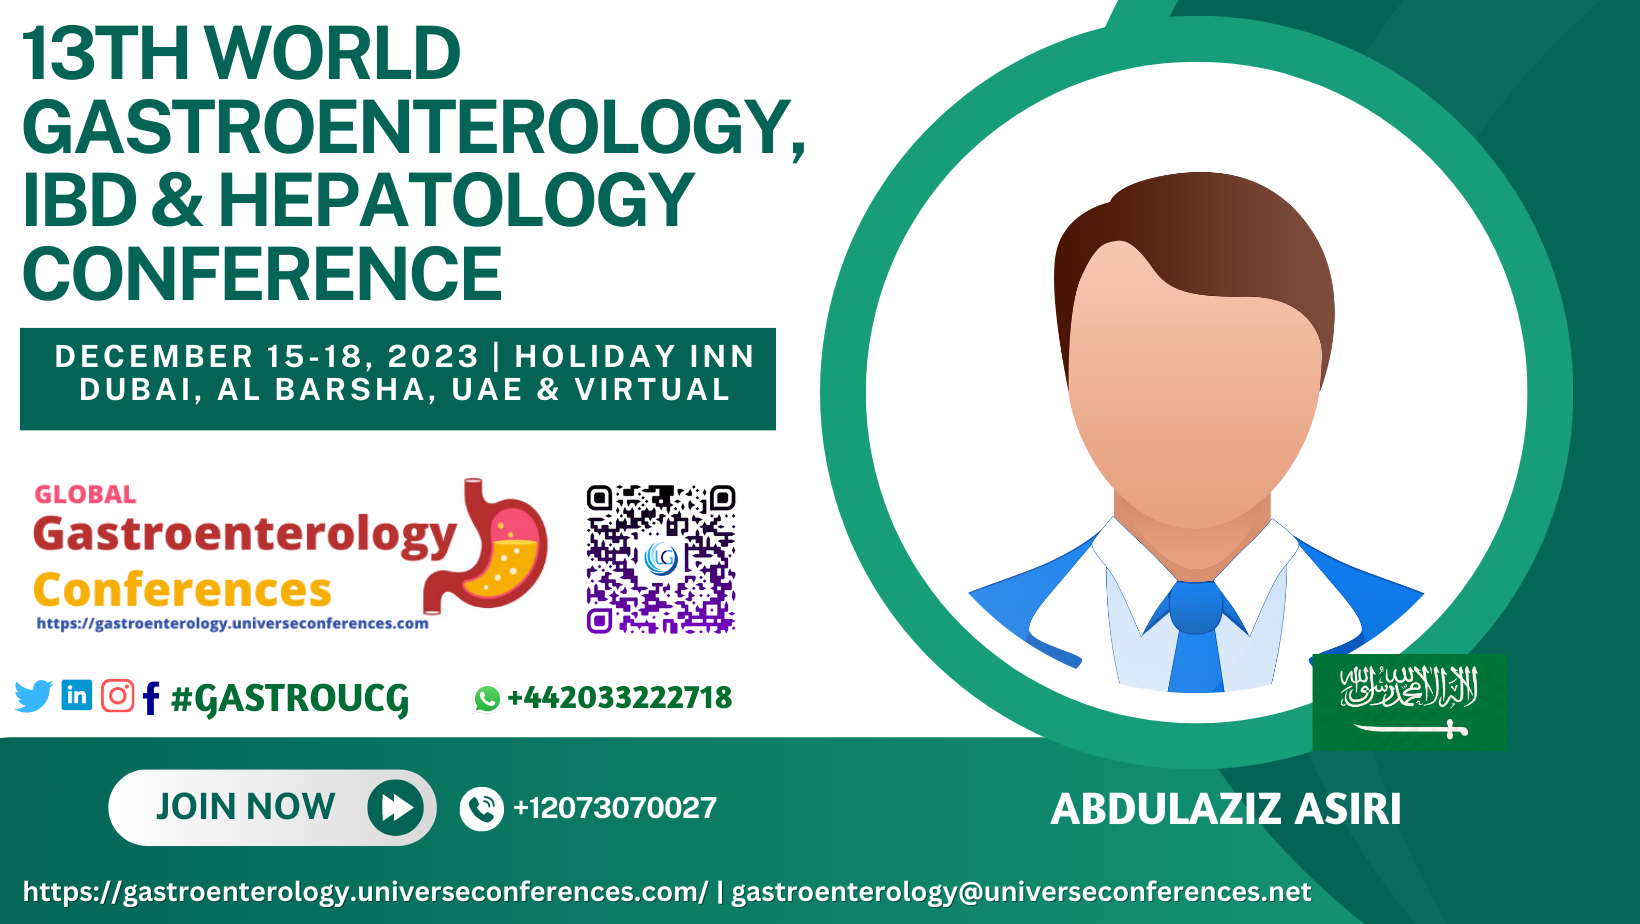 Abdulaziz Asiri_13th World Gastroenterology, IBD & Hepatology Conference